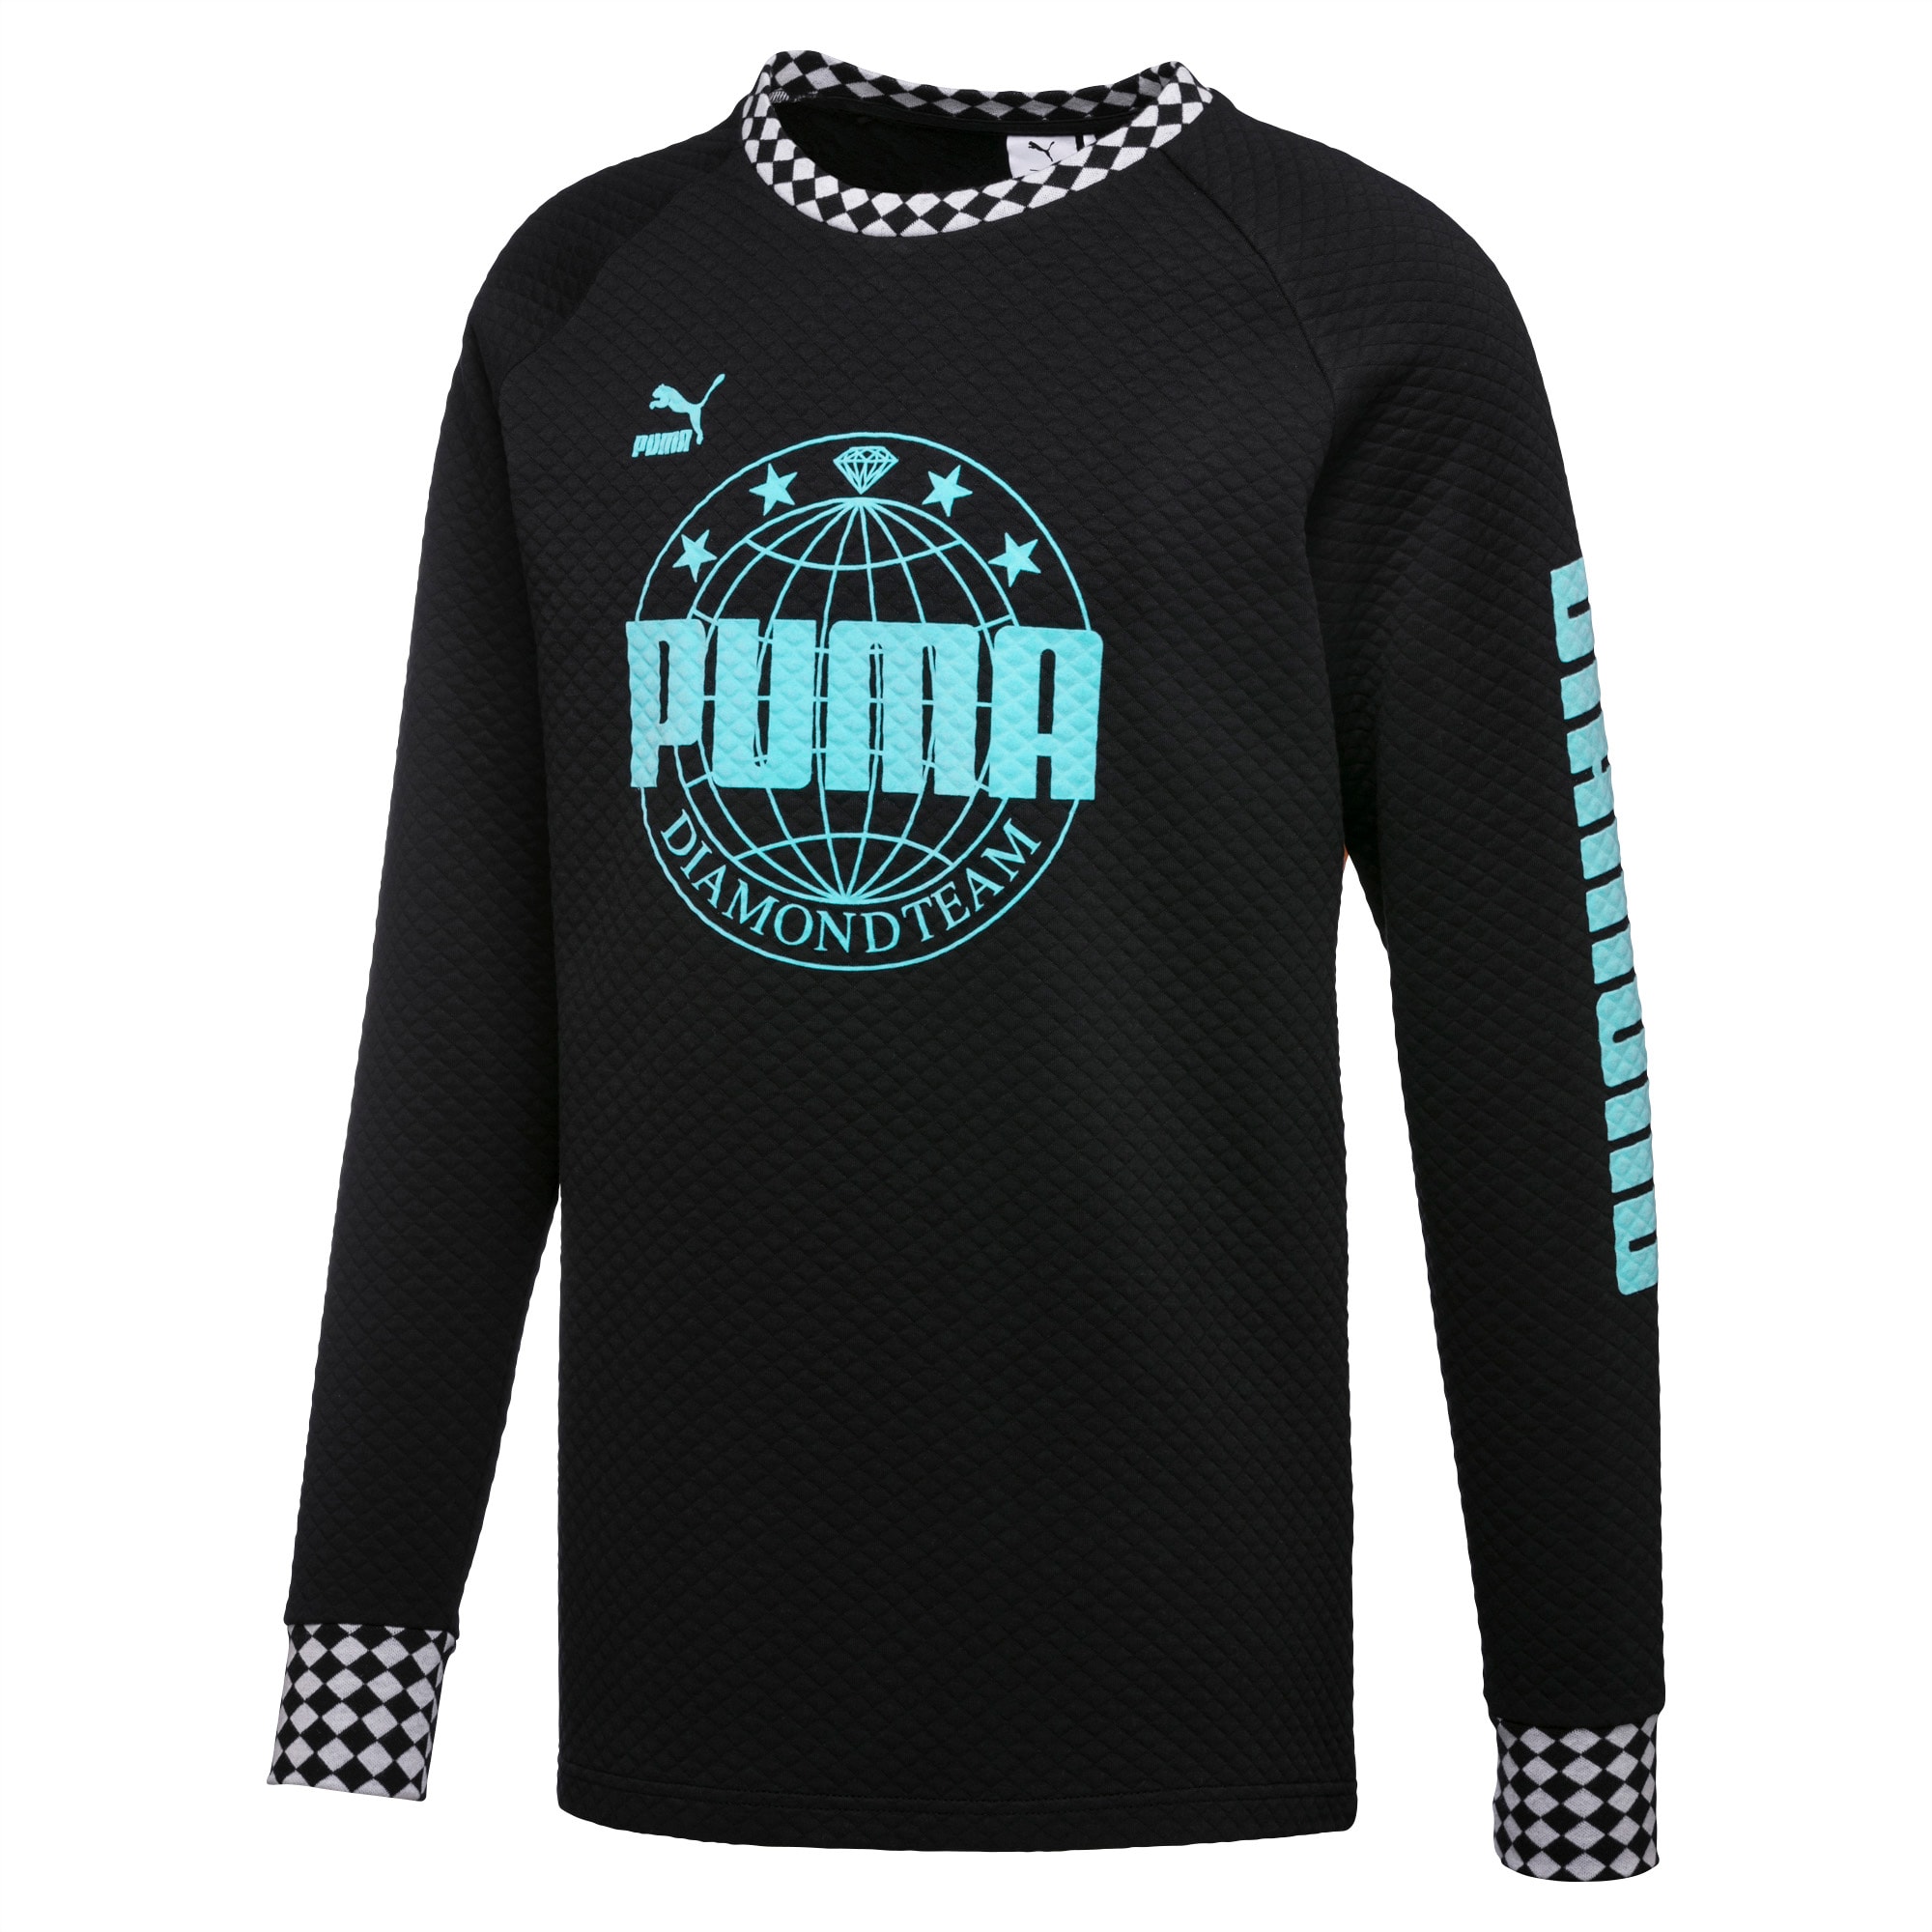 puma diamond team sweater